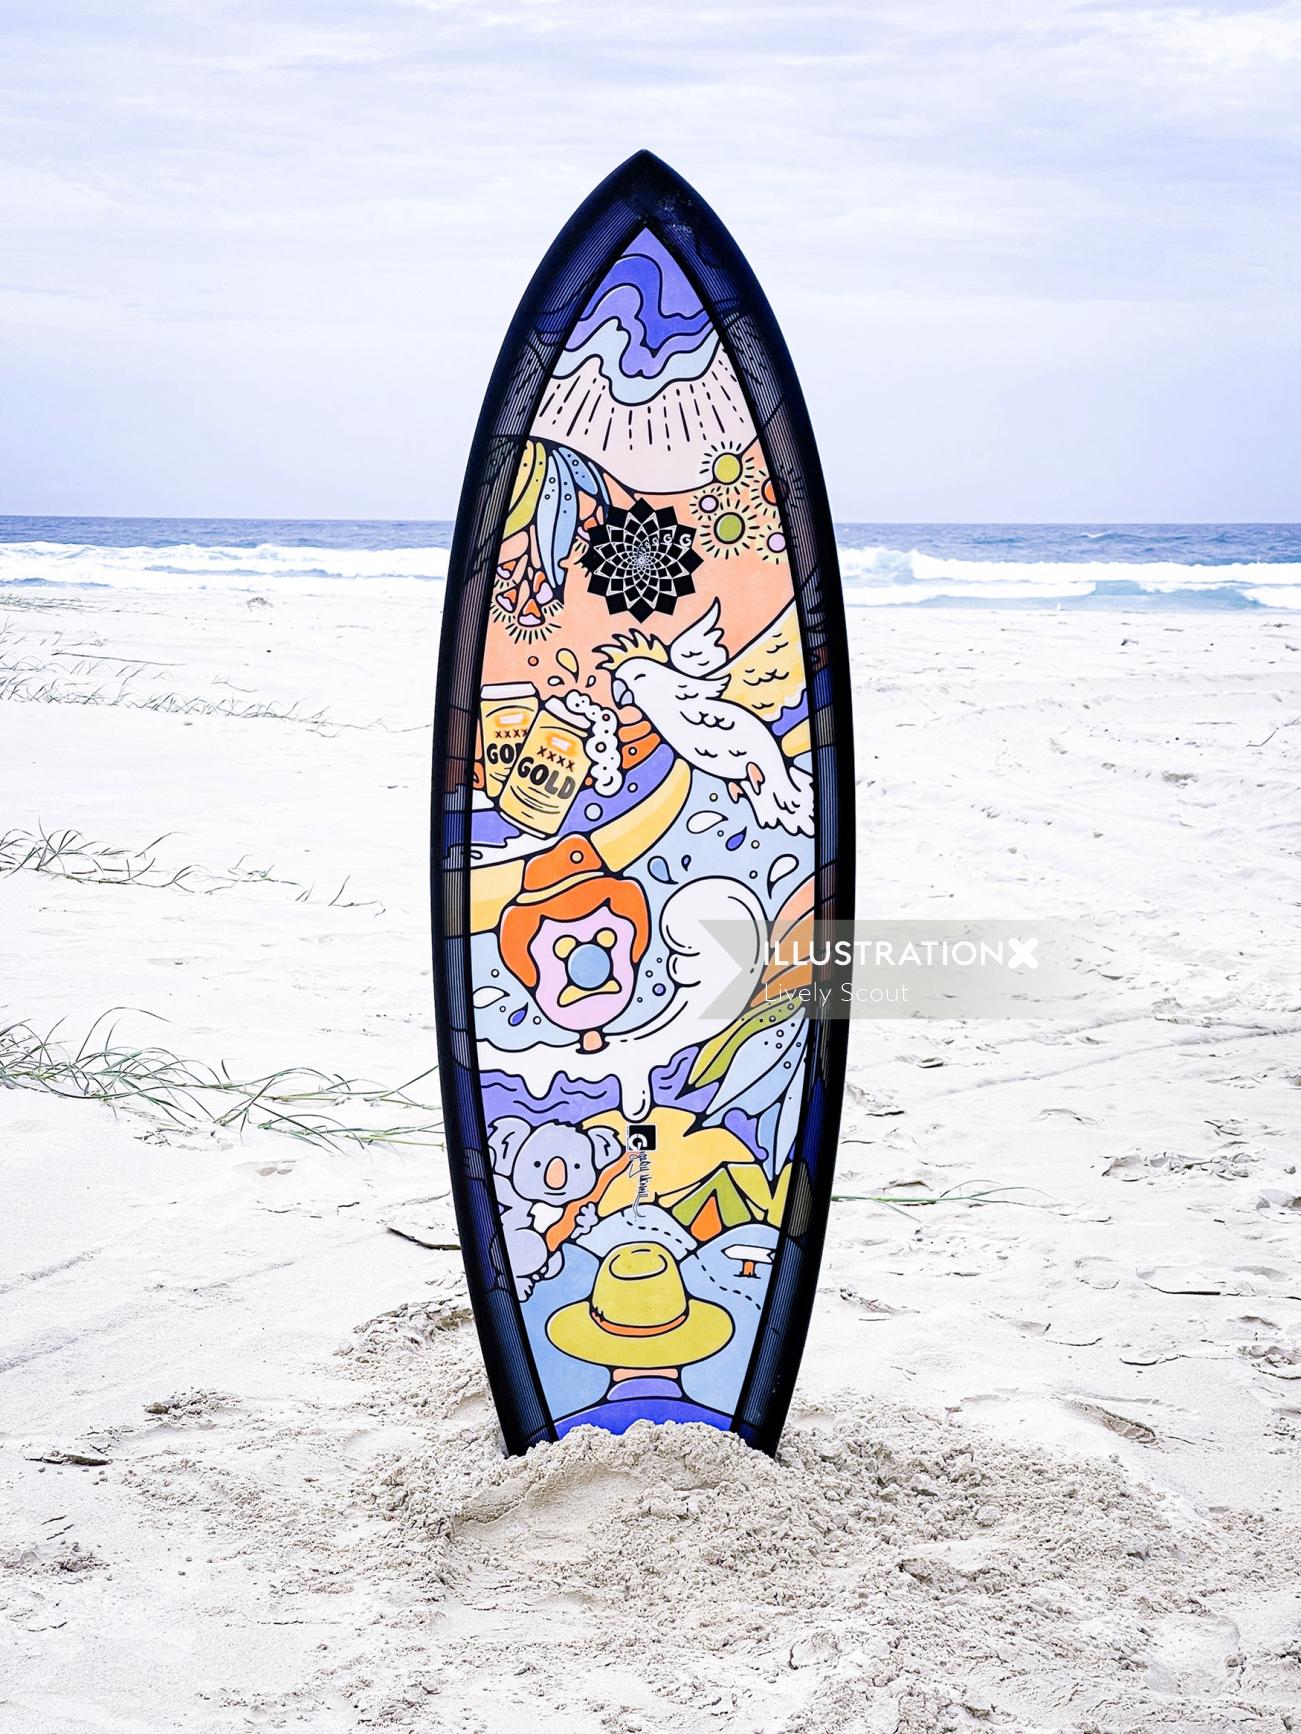 australiana theme surfboard on the beach